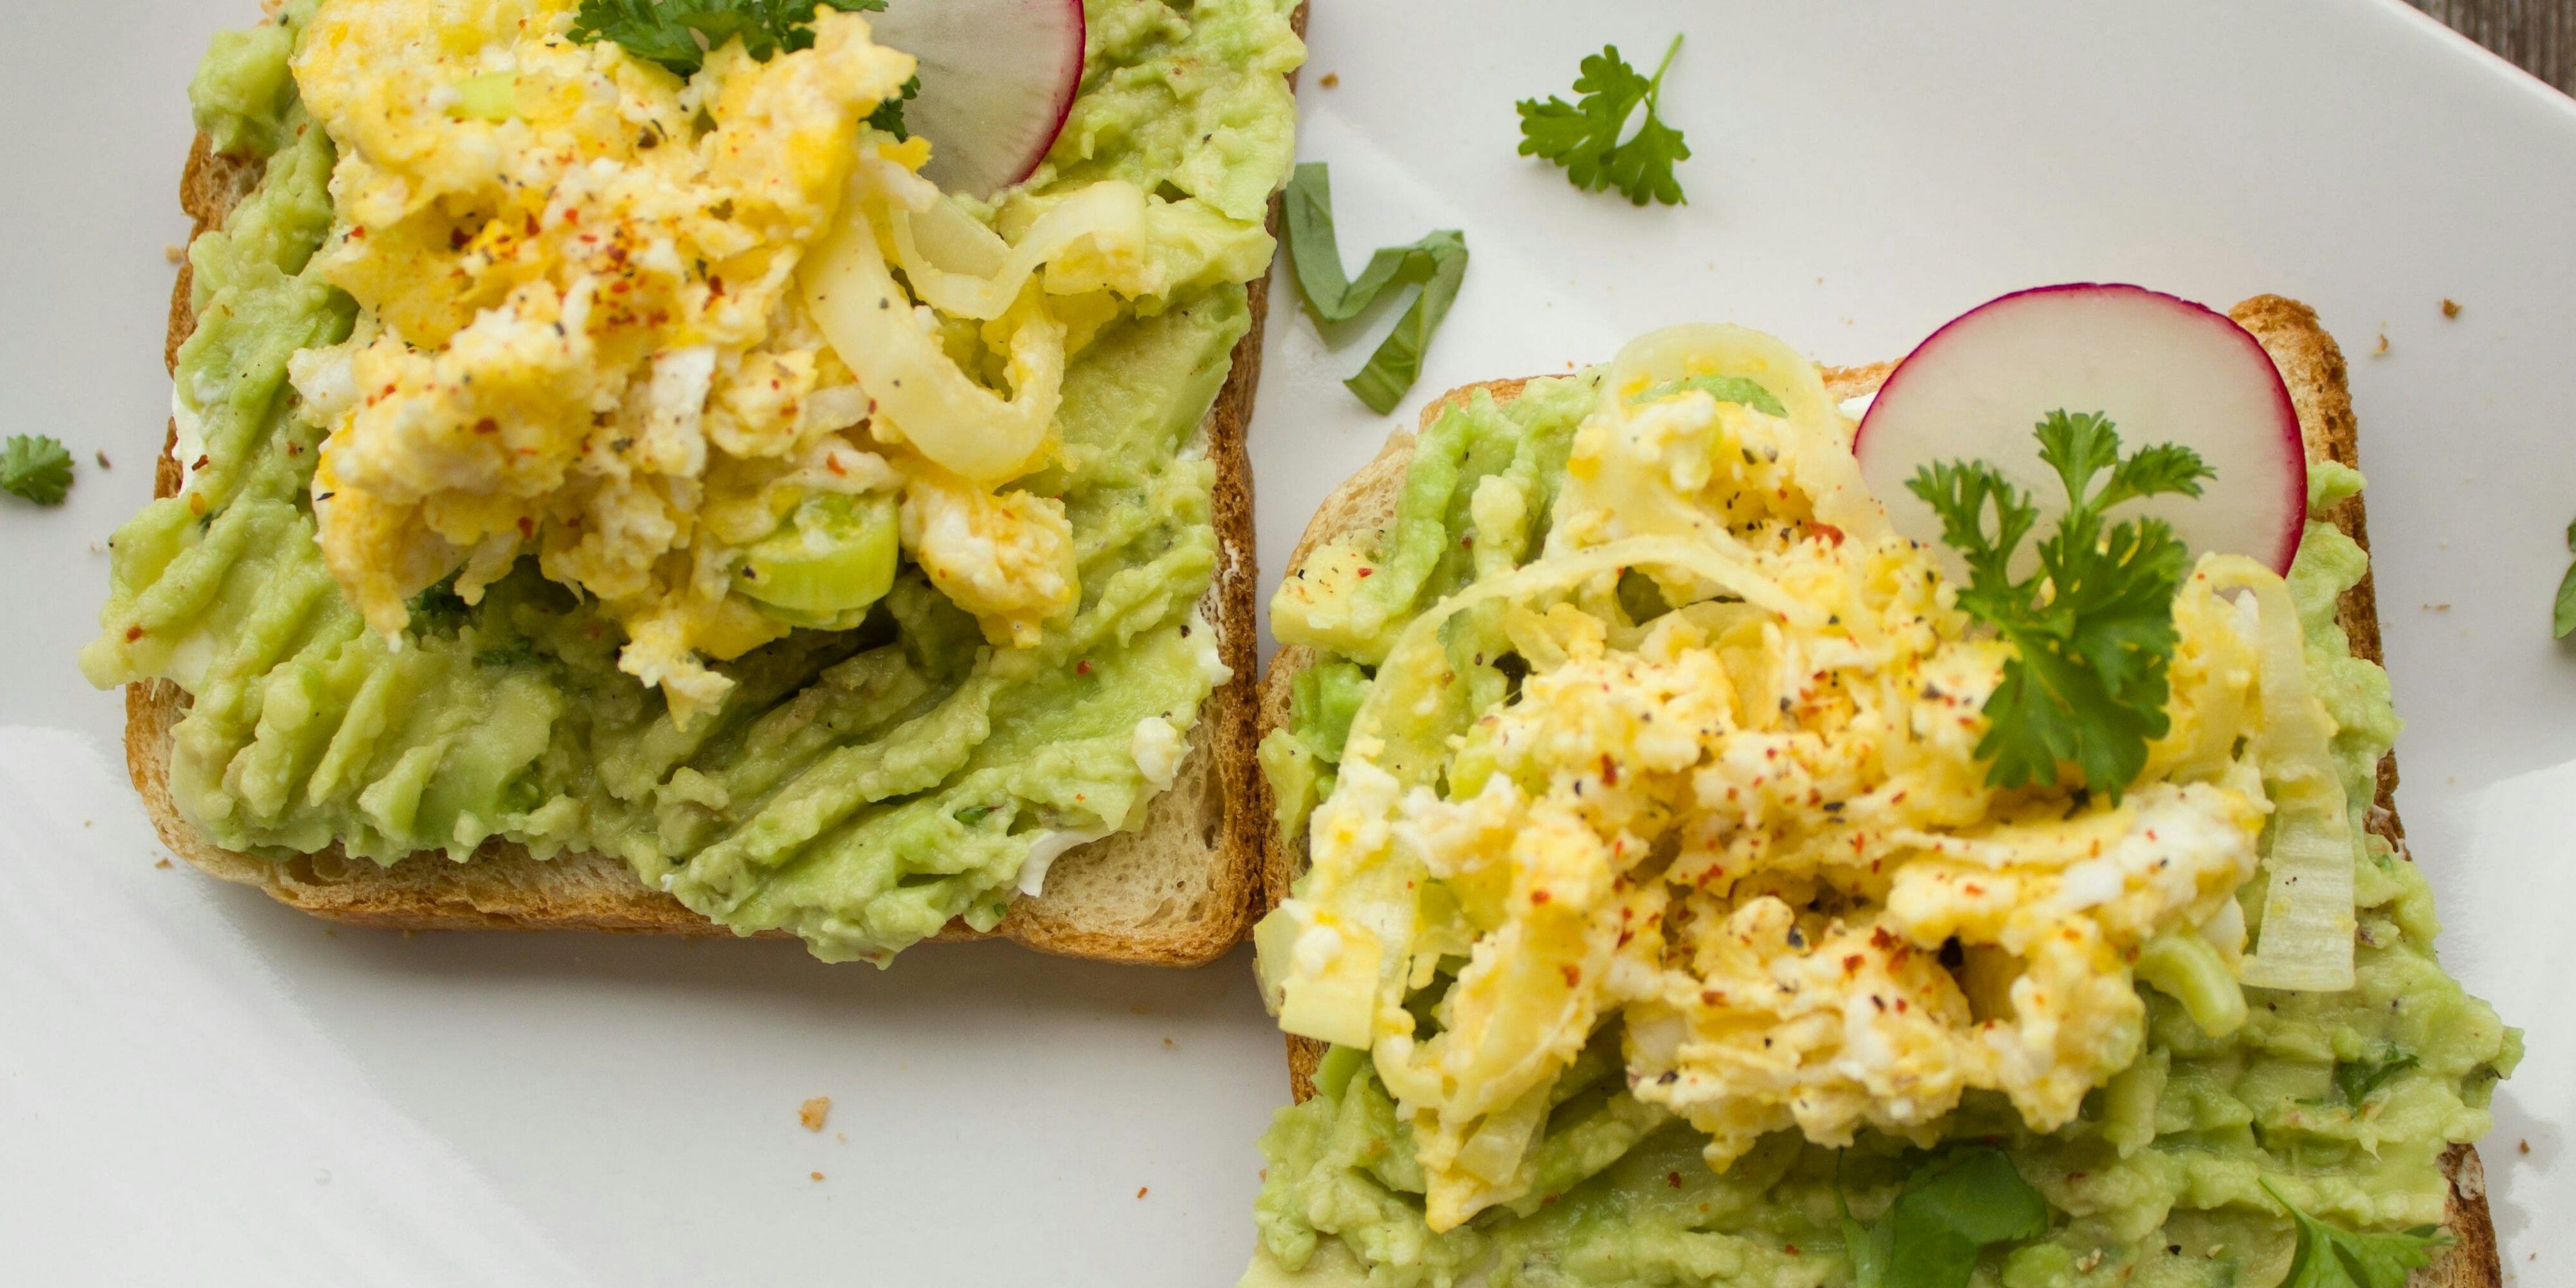 Avocado toast with eggs